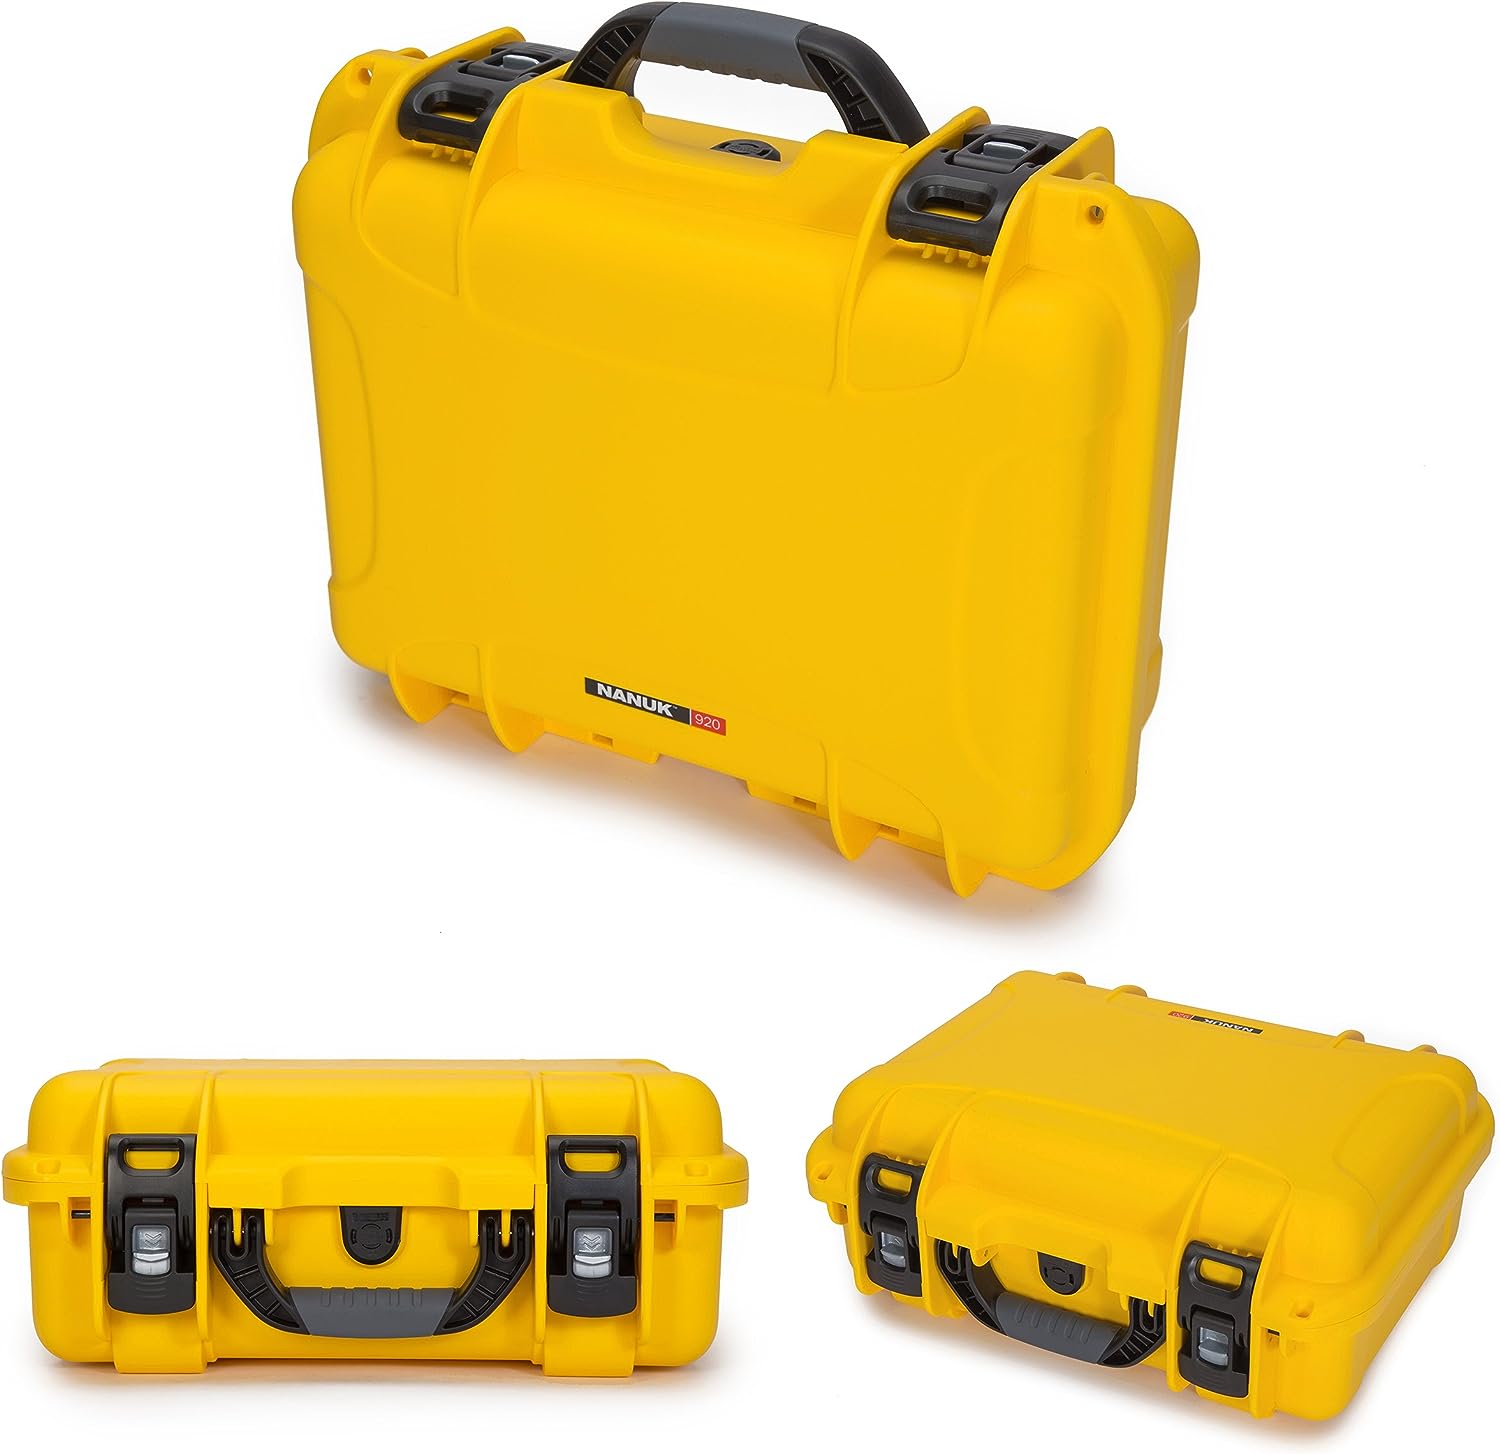 Nanuk 920-MAV4 DJI Drone Waterproof Hard Case with Custom Foam Insert for DJI Mavic PRO Yellow